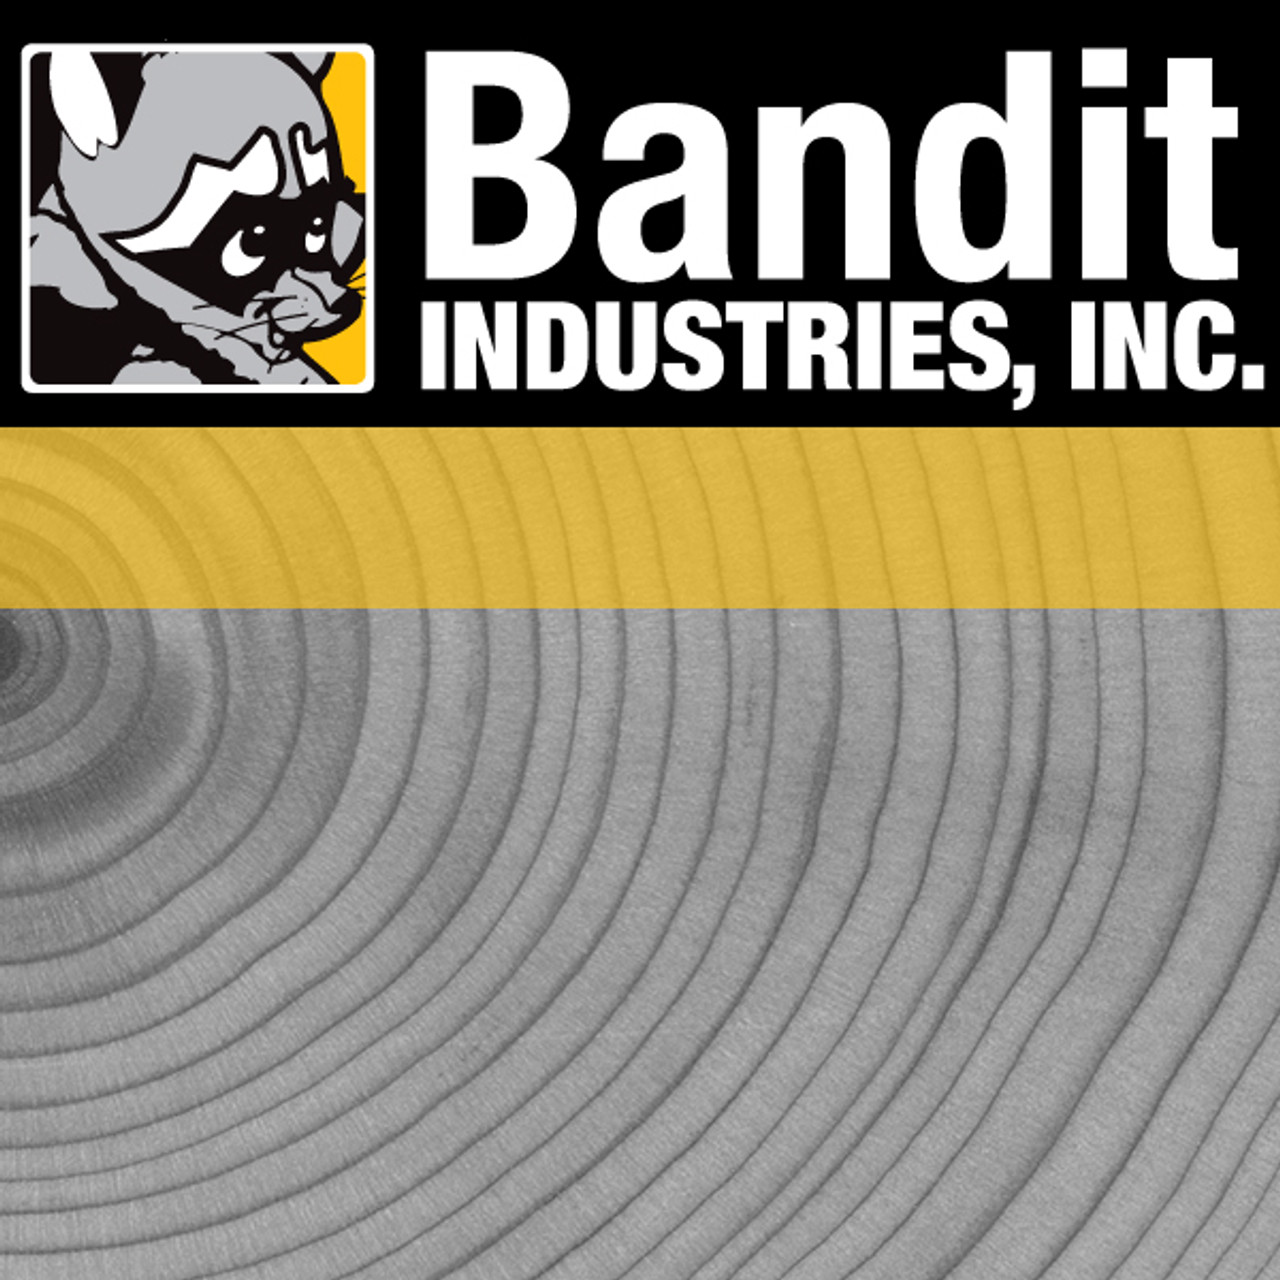 990-100062: BANDIT 45"" WIDE INFEED HOPPER IN LIEU OF STANDARD